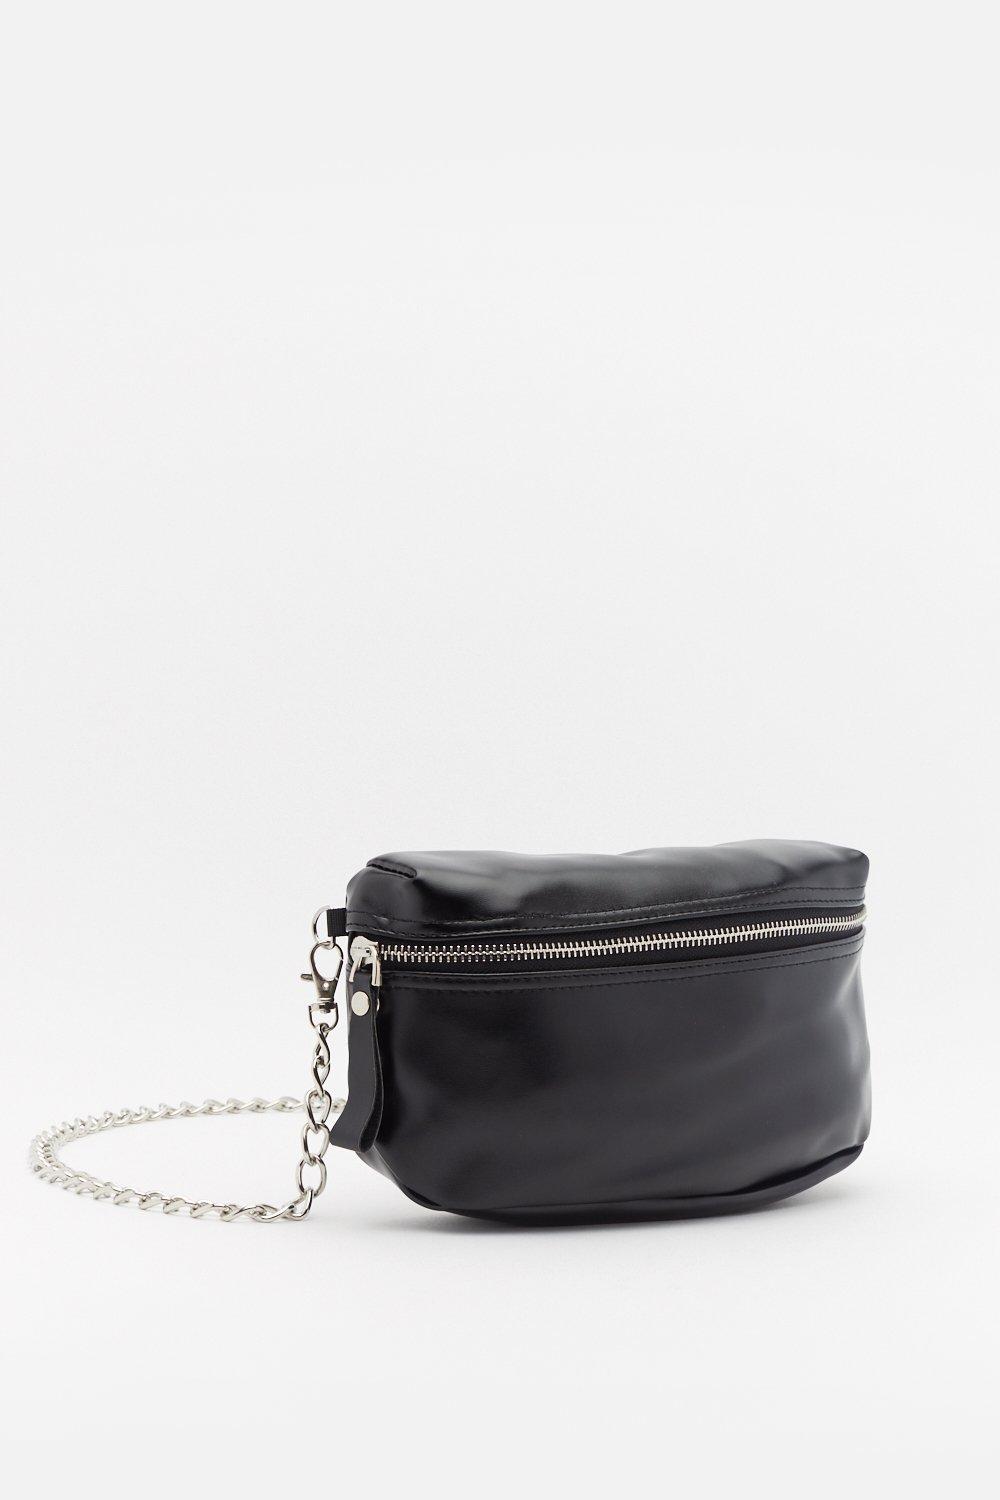 black crossbody purse with chain strap